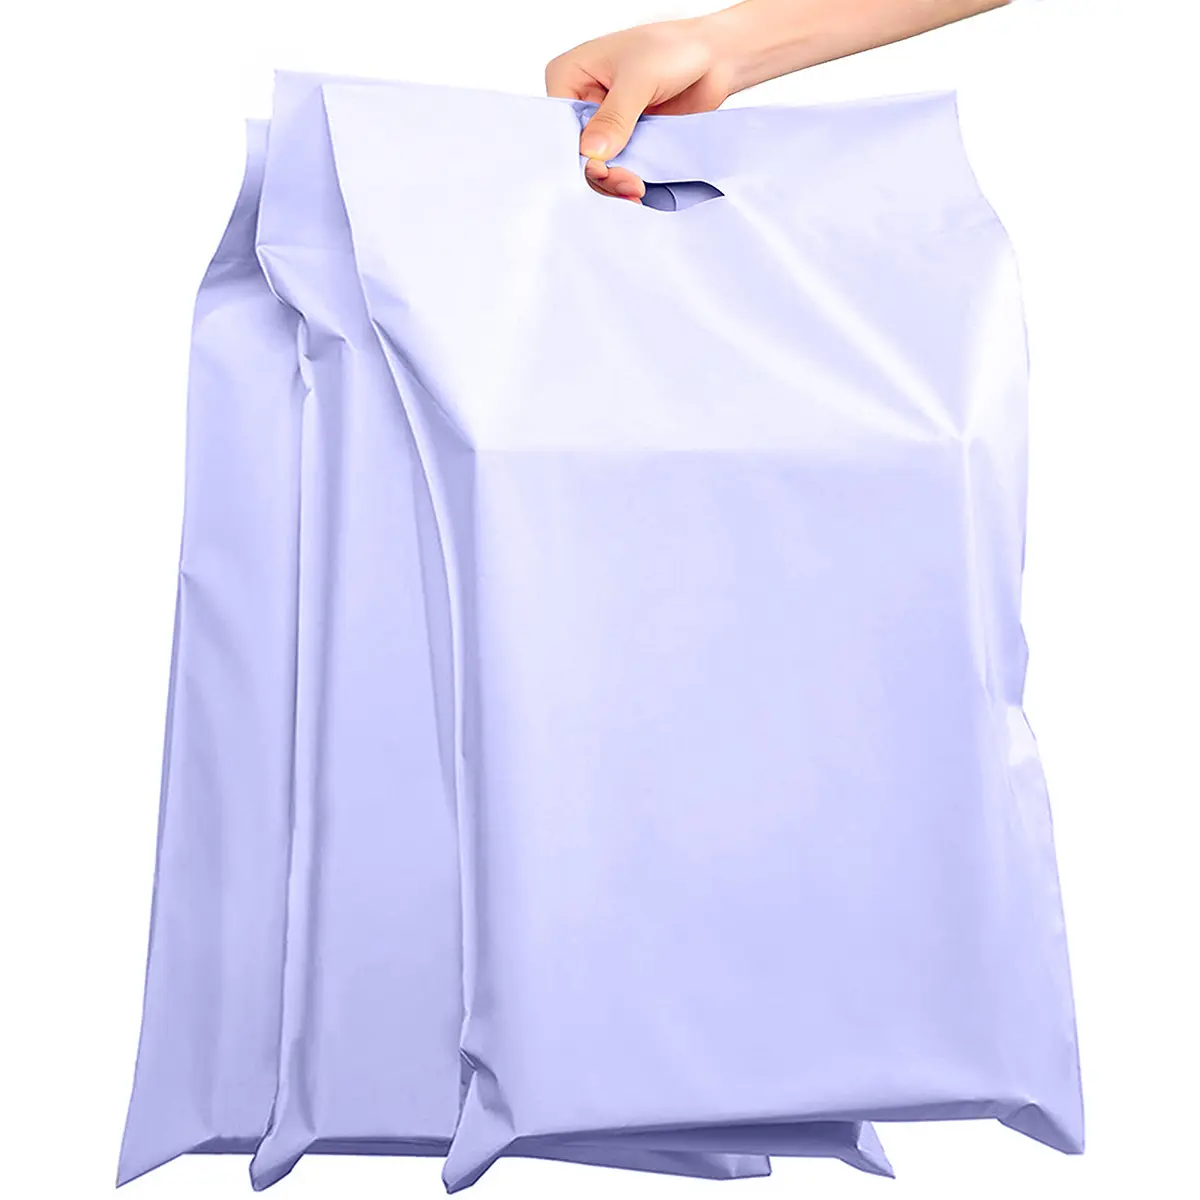 Logo kustom cetak ramah lingkungan pengiriman plastik tas kurir pakaian kemasan amplop Biodegradable tas surat polybag